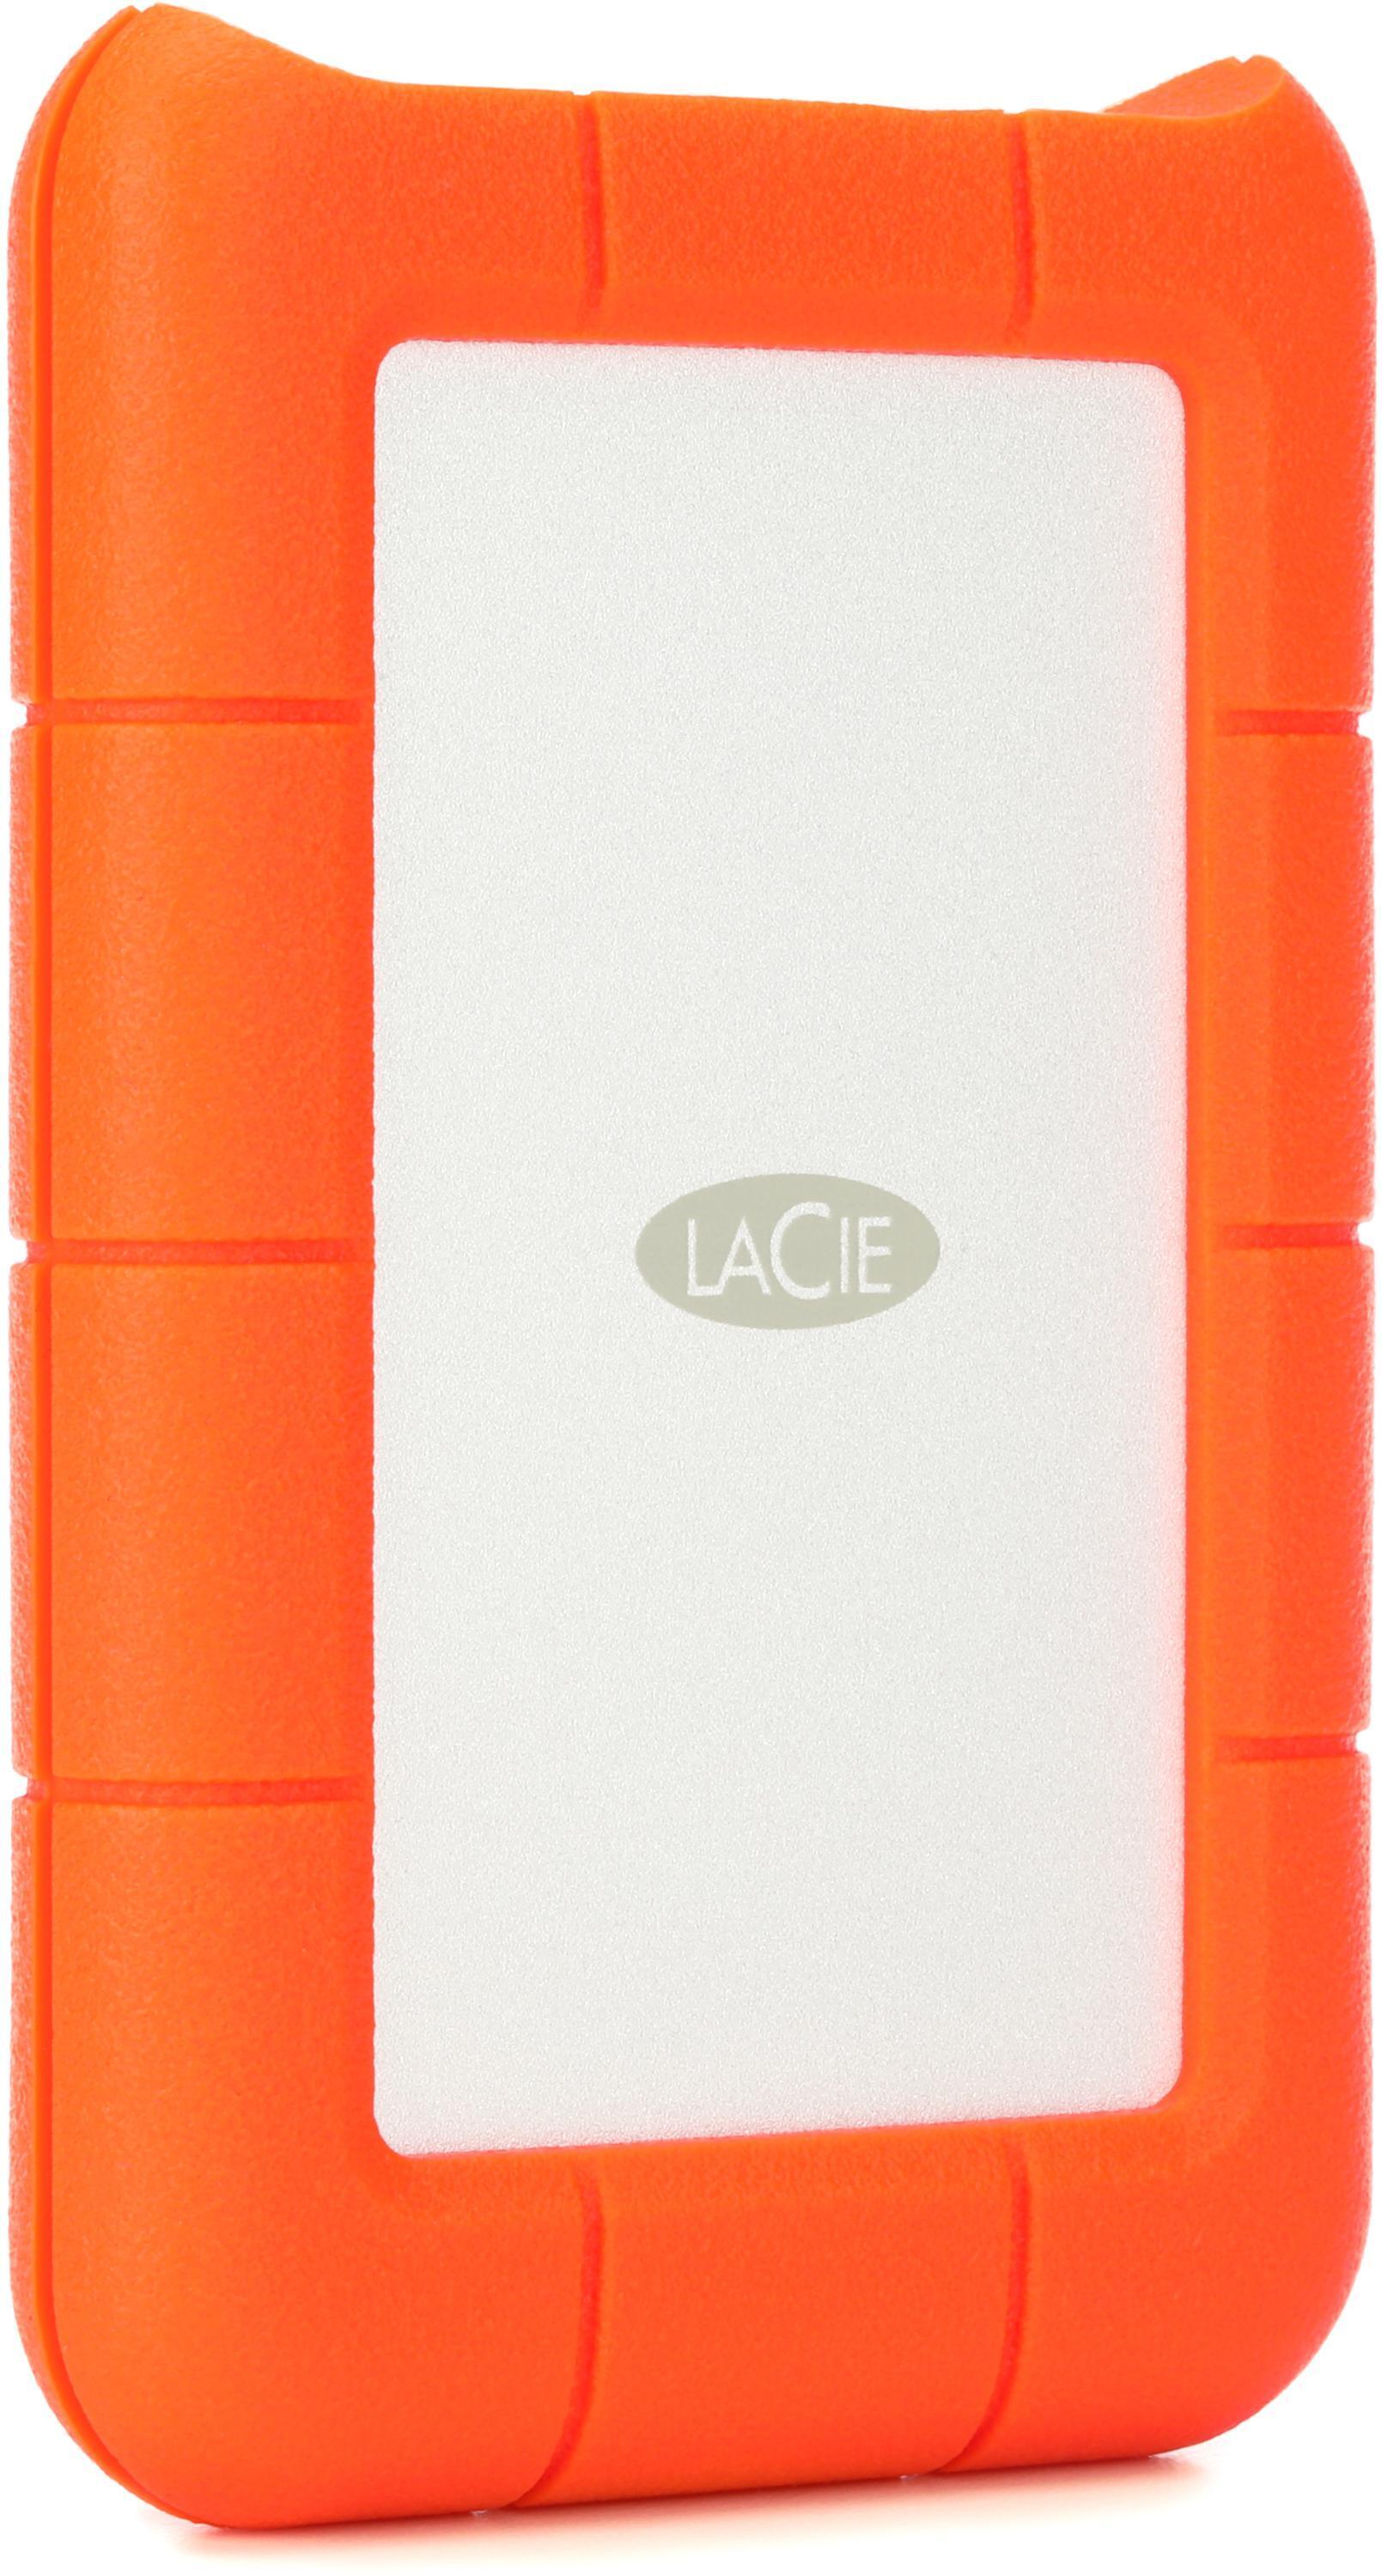 LaCie Rugged Mini 4TB USB 3.0 Portable Hard Drive